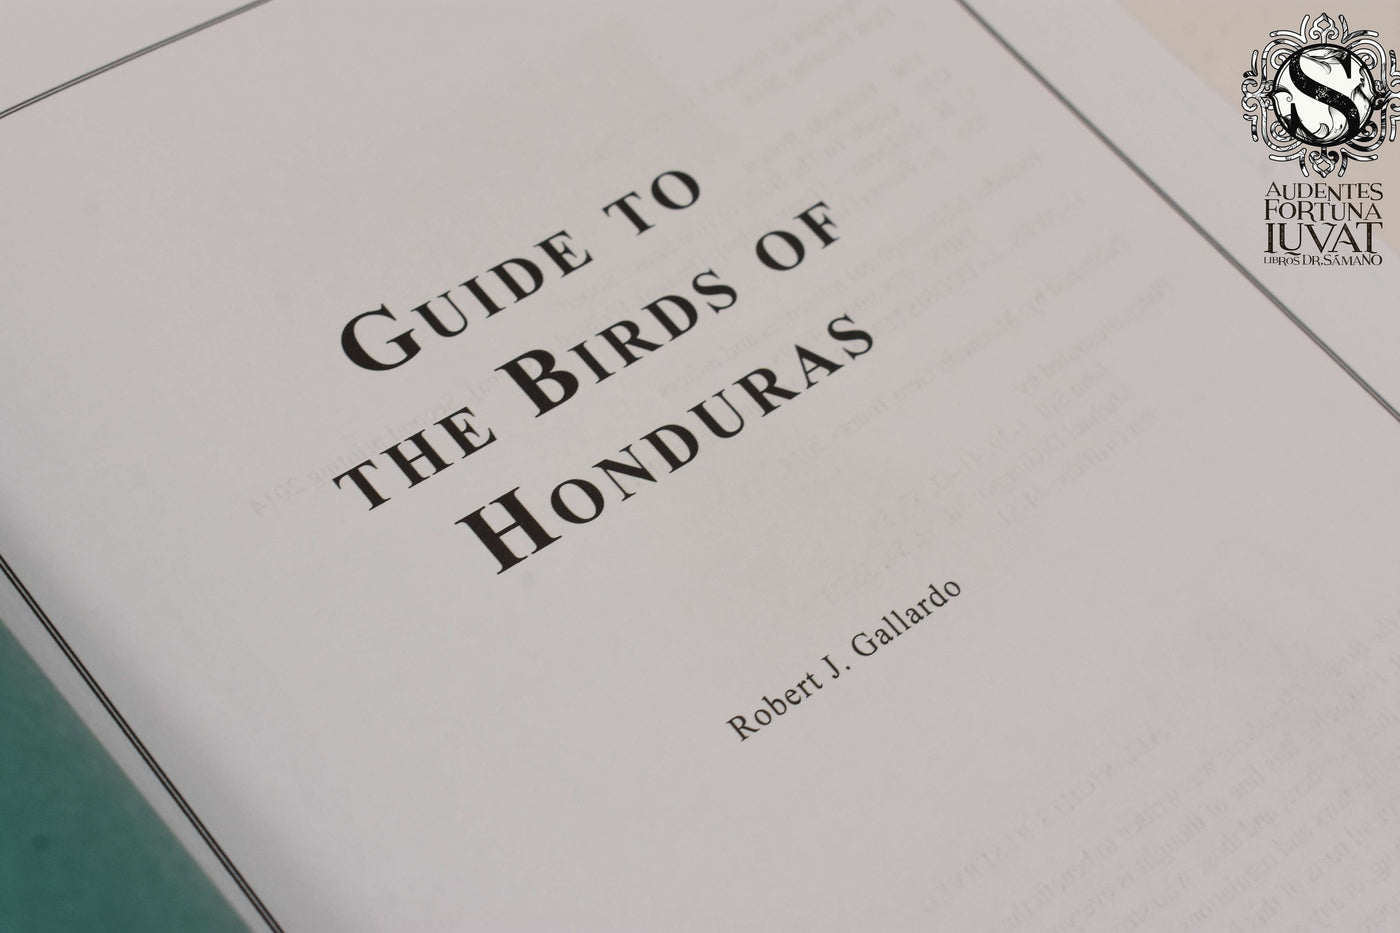 Guide to the birds of America - ROBERT J. GALLARDO